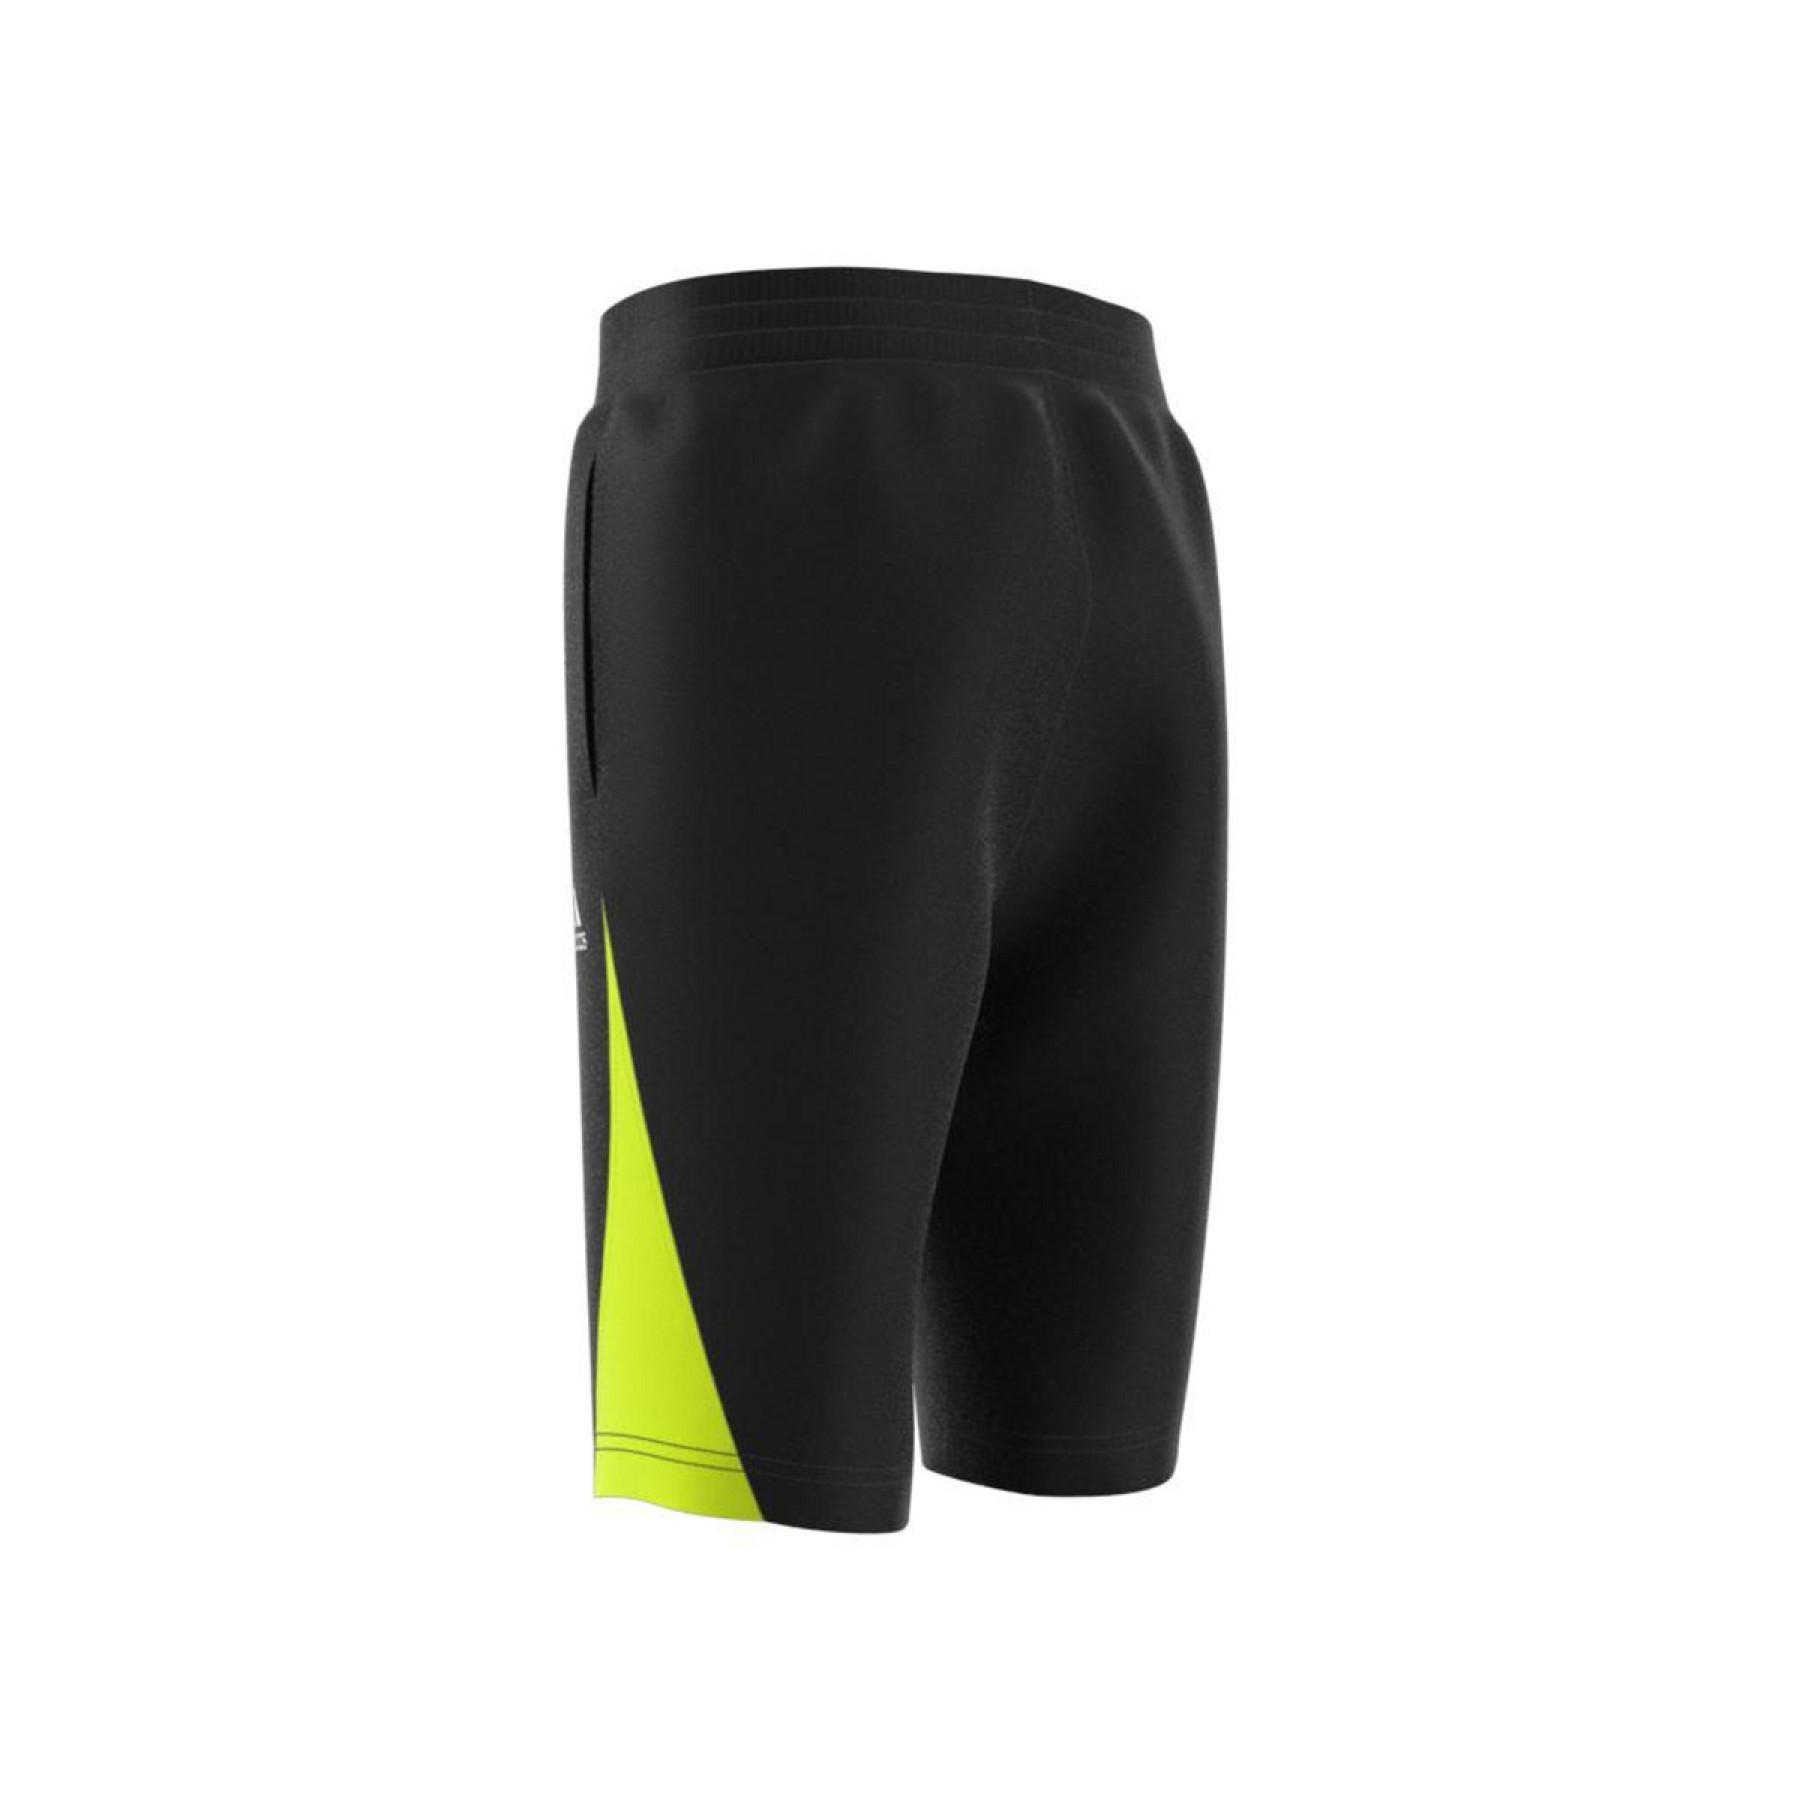 Kinder shorts adidas Predator Football-Inspired